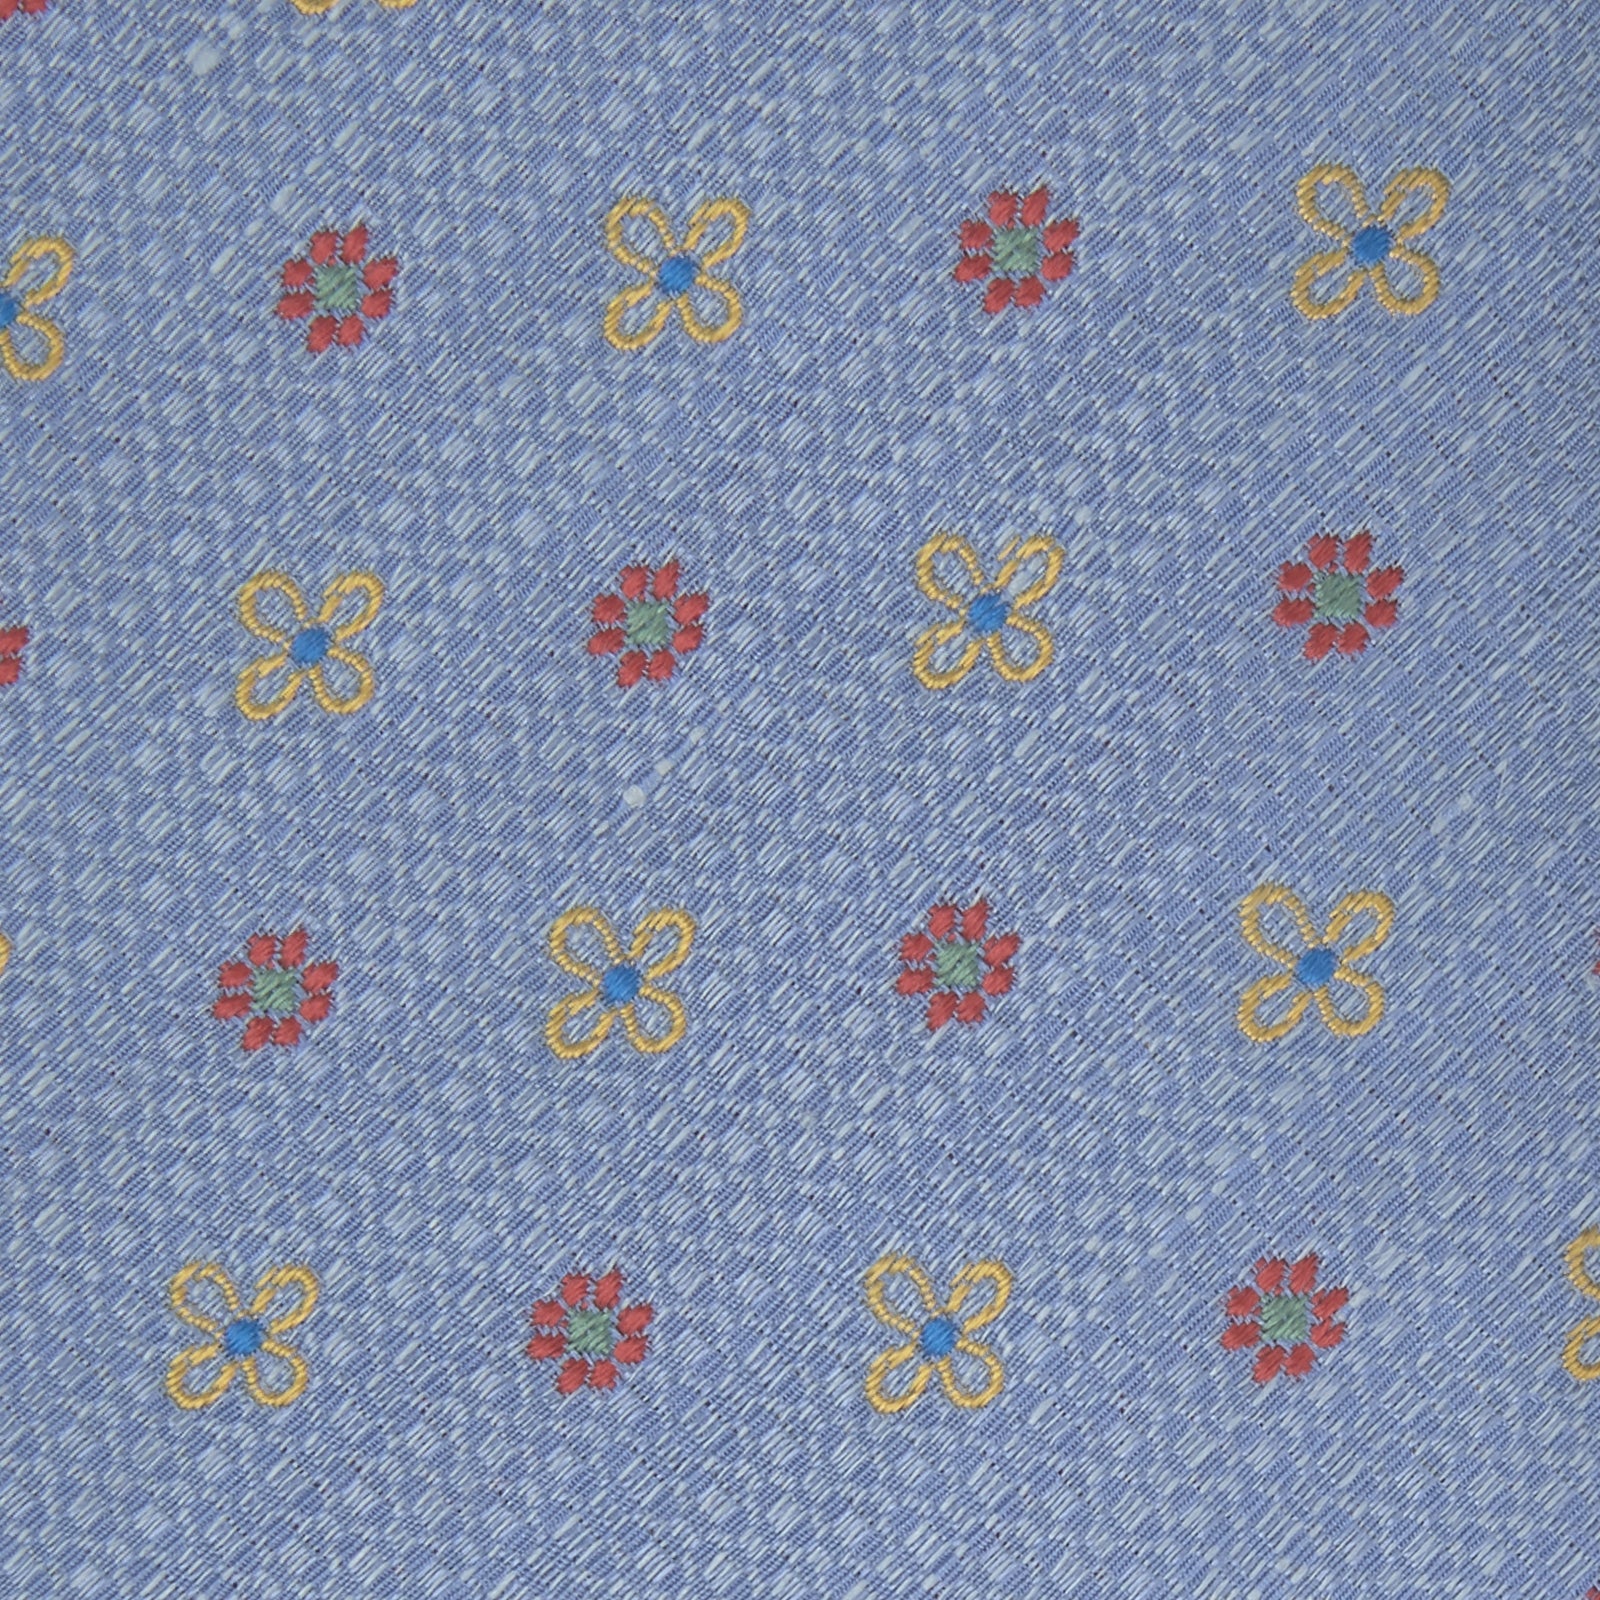 Sky Blue Floral Silk and Linen Blend Tie